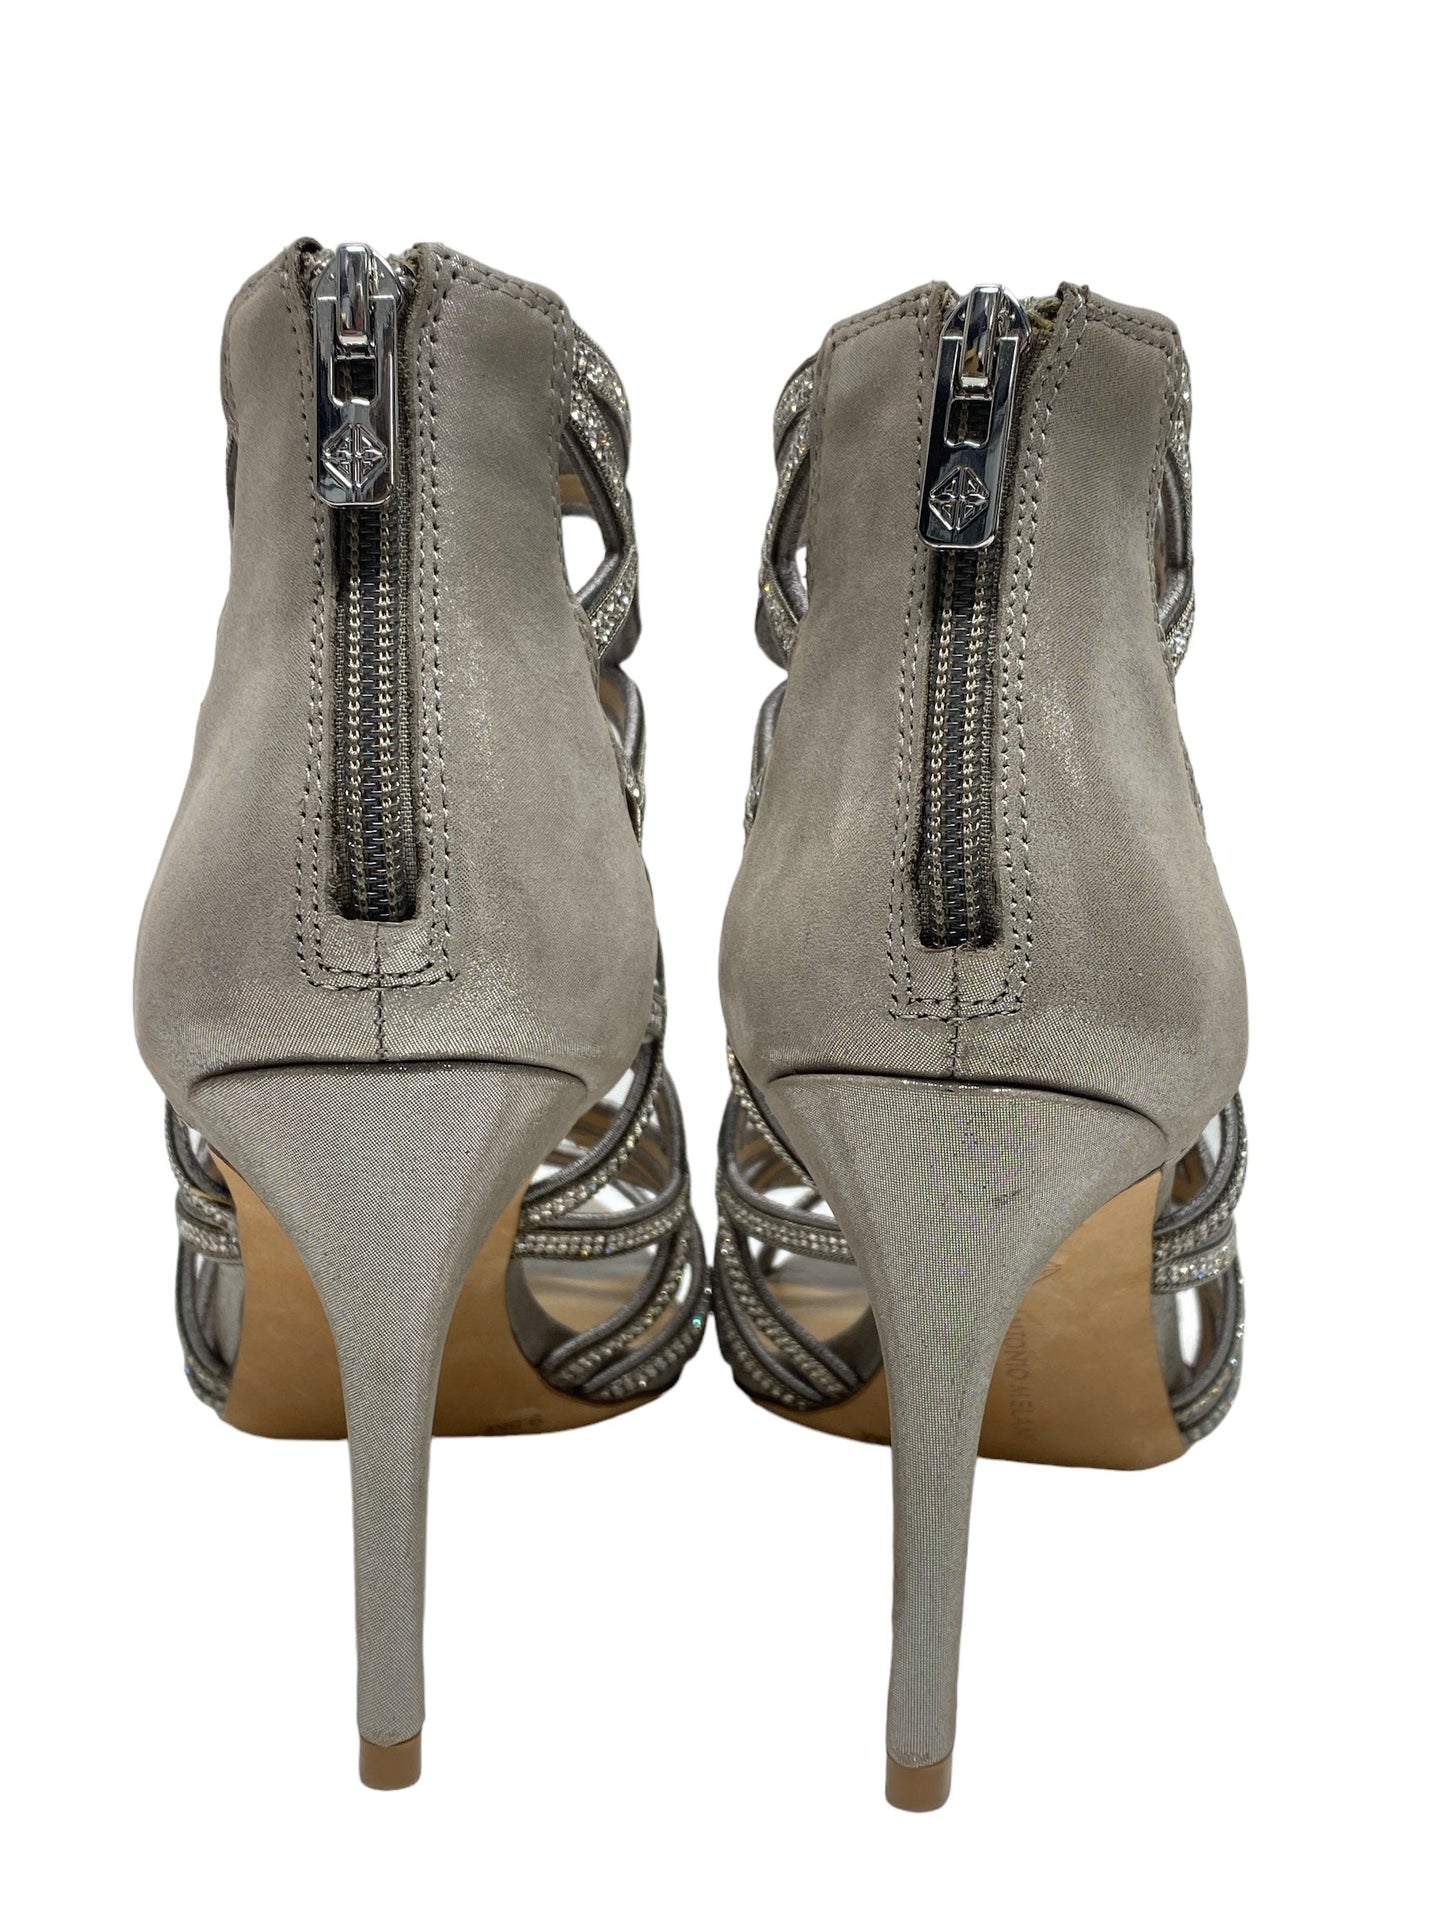 Sandals Heels Stiletto By Antonio Melani  Size: 9.5